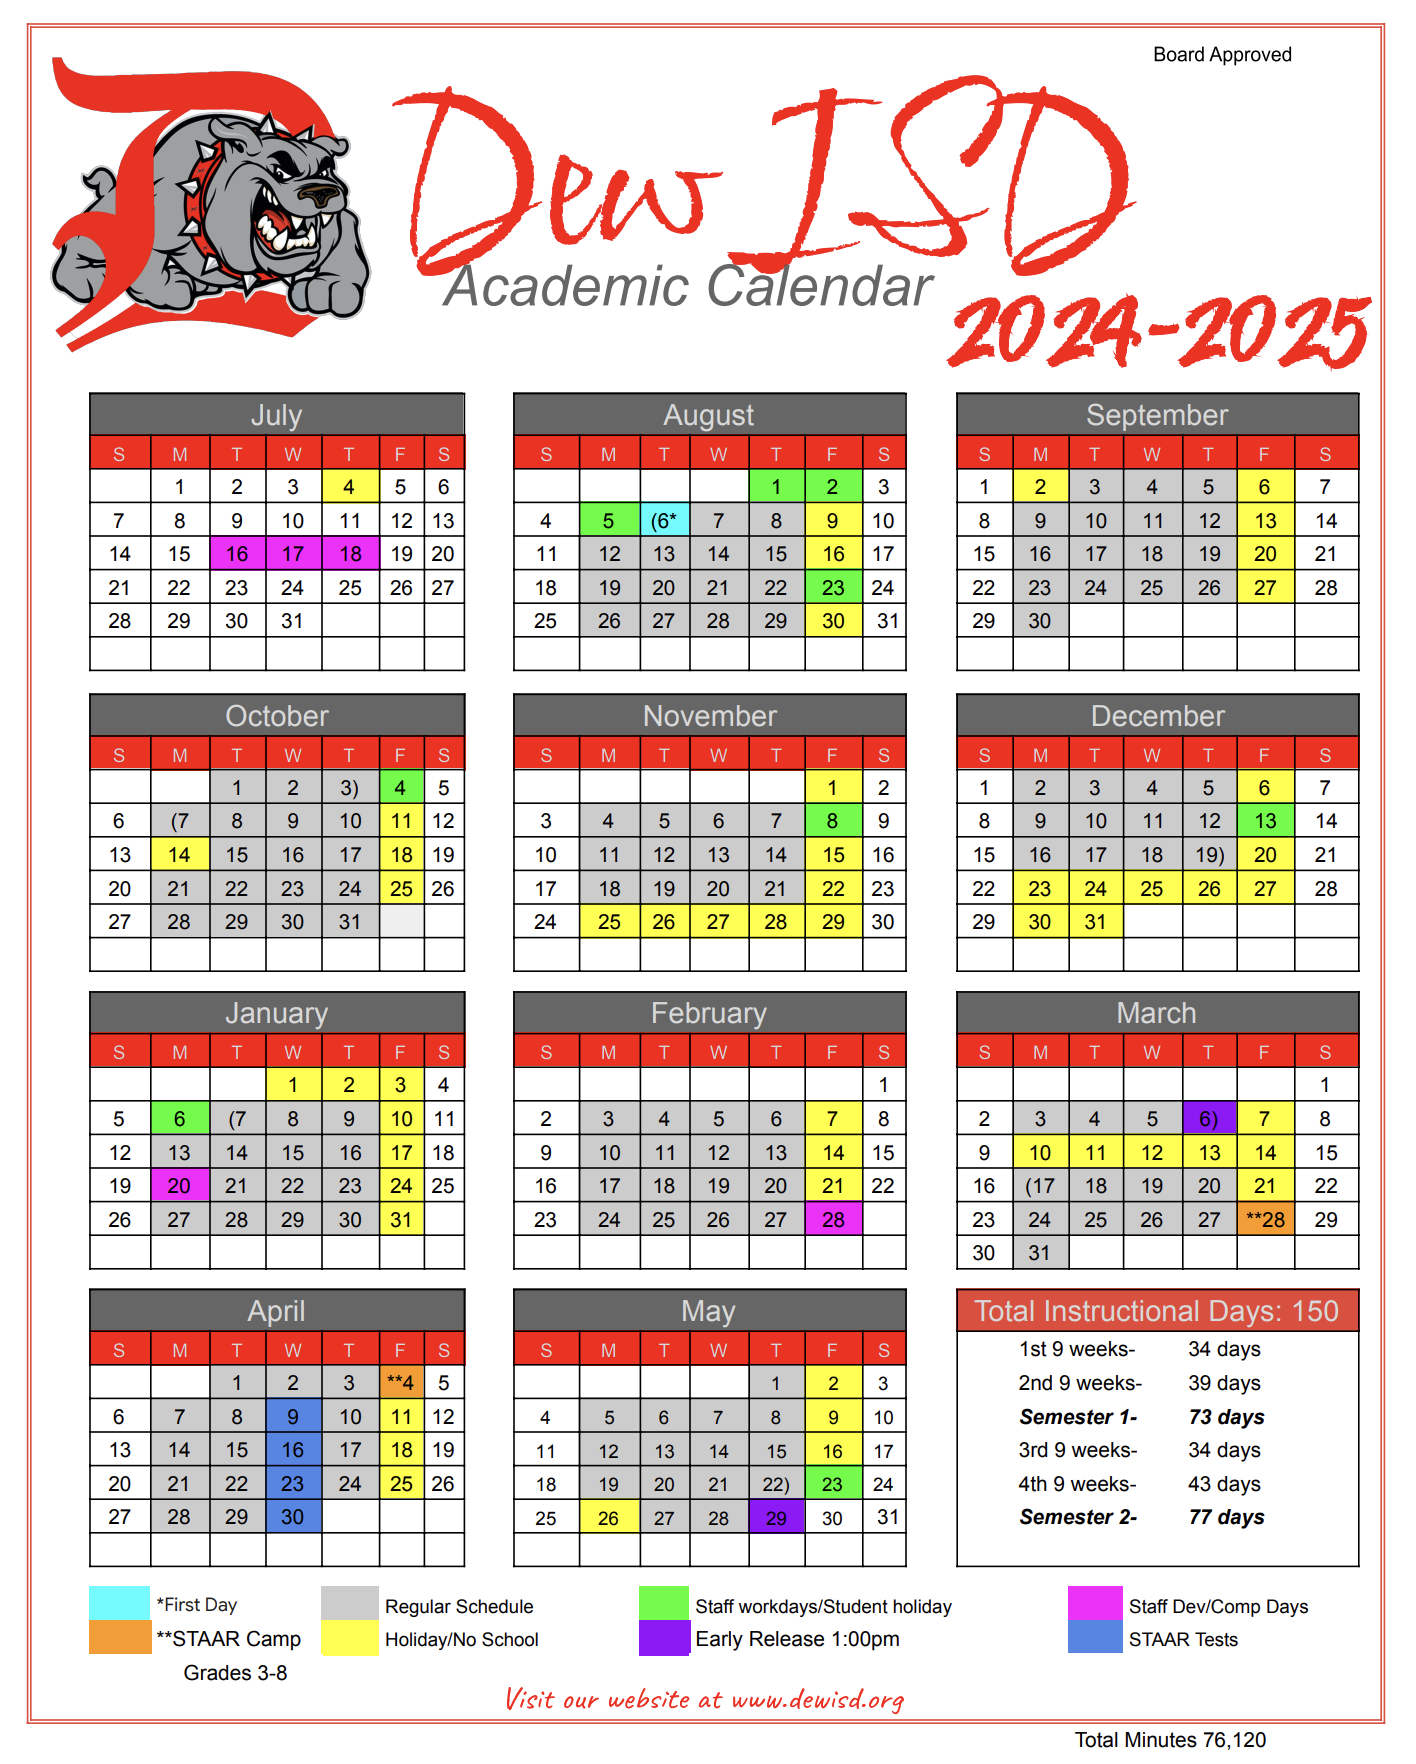 New!! 2024-2025 Board Approved School Calendar